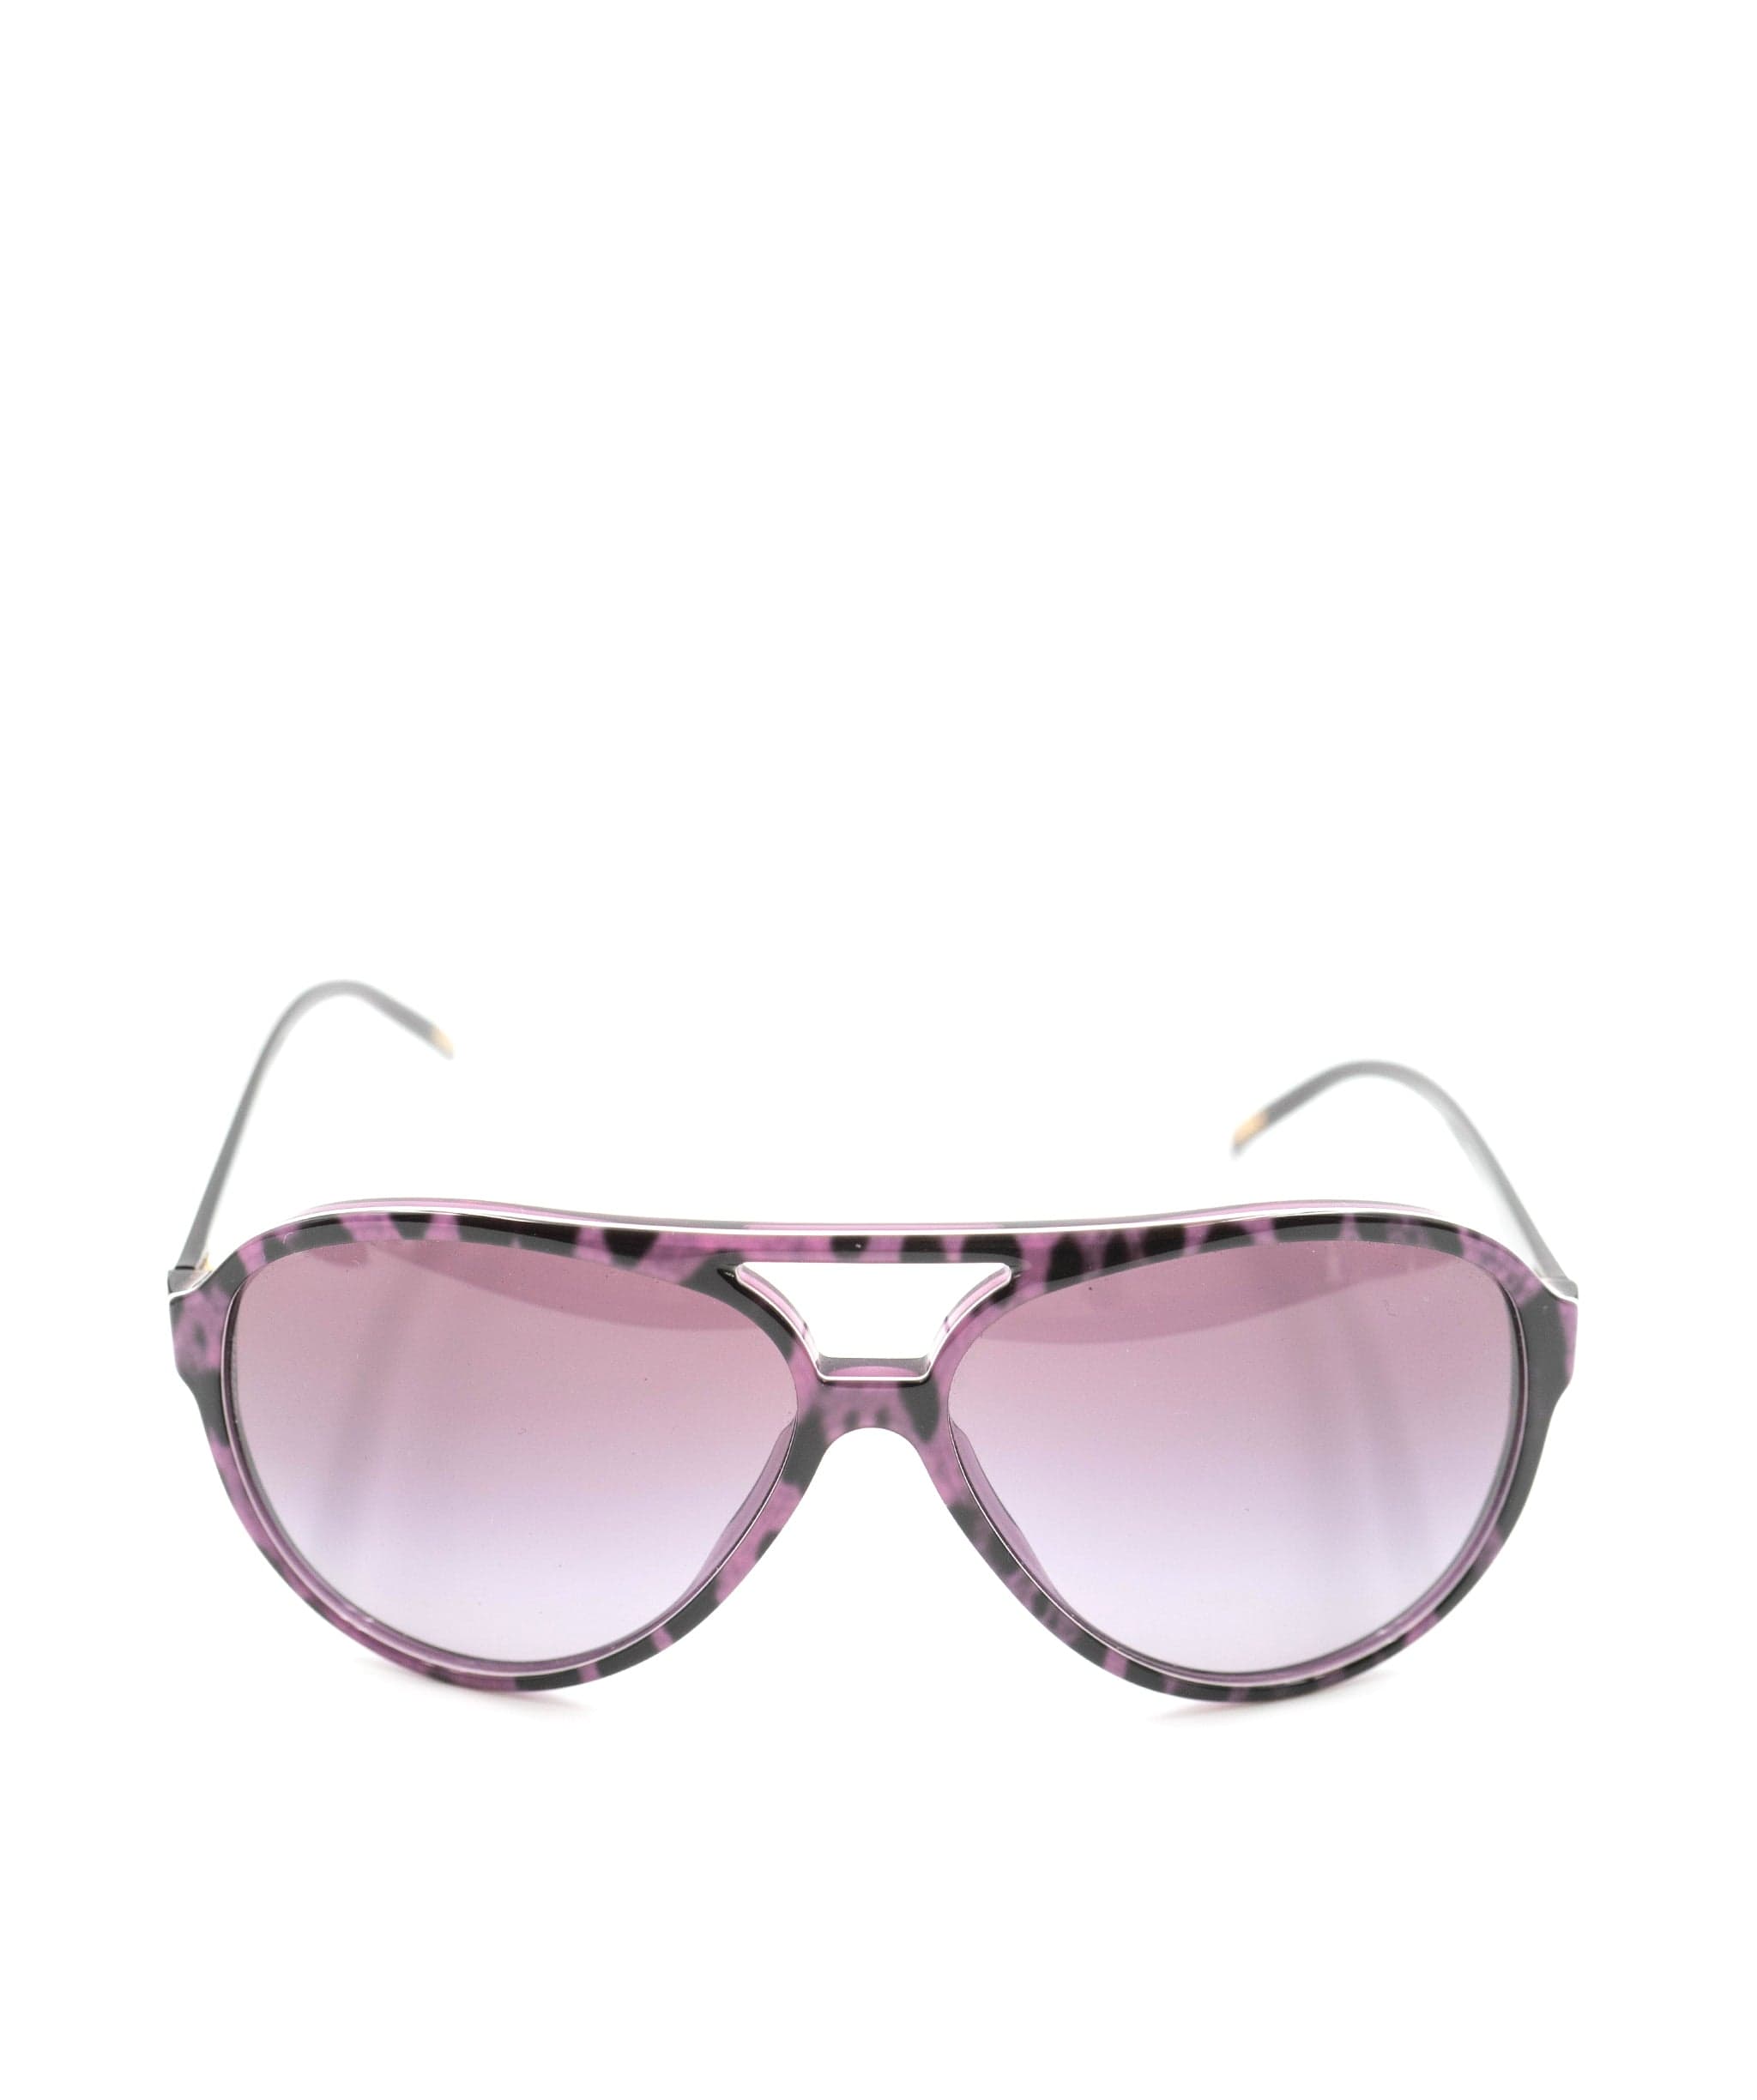 Dolce & Gabbana D&G pink sunglasses, full set AEL1048